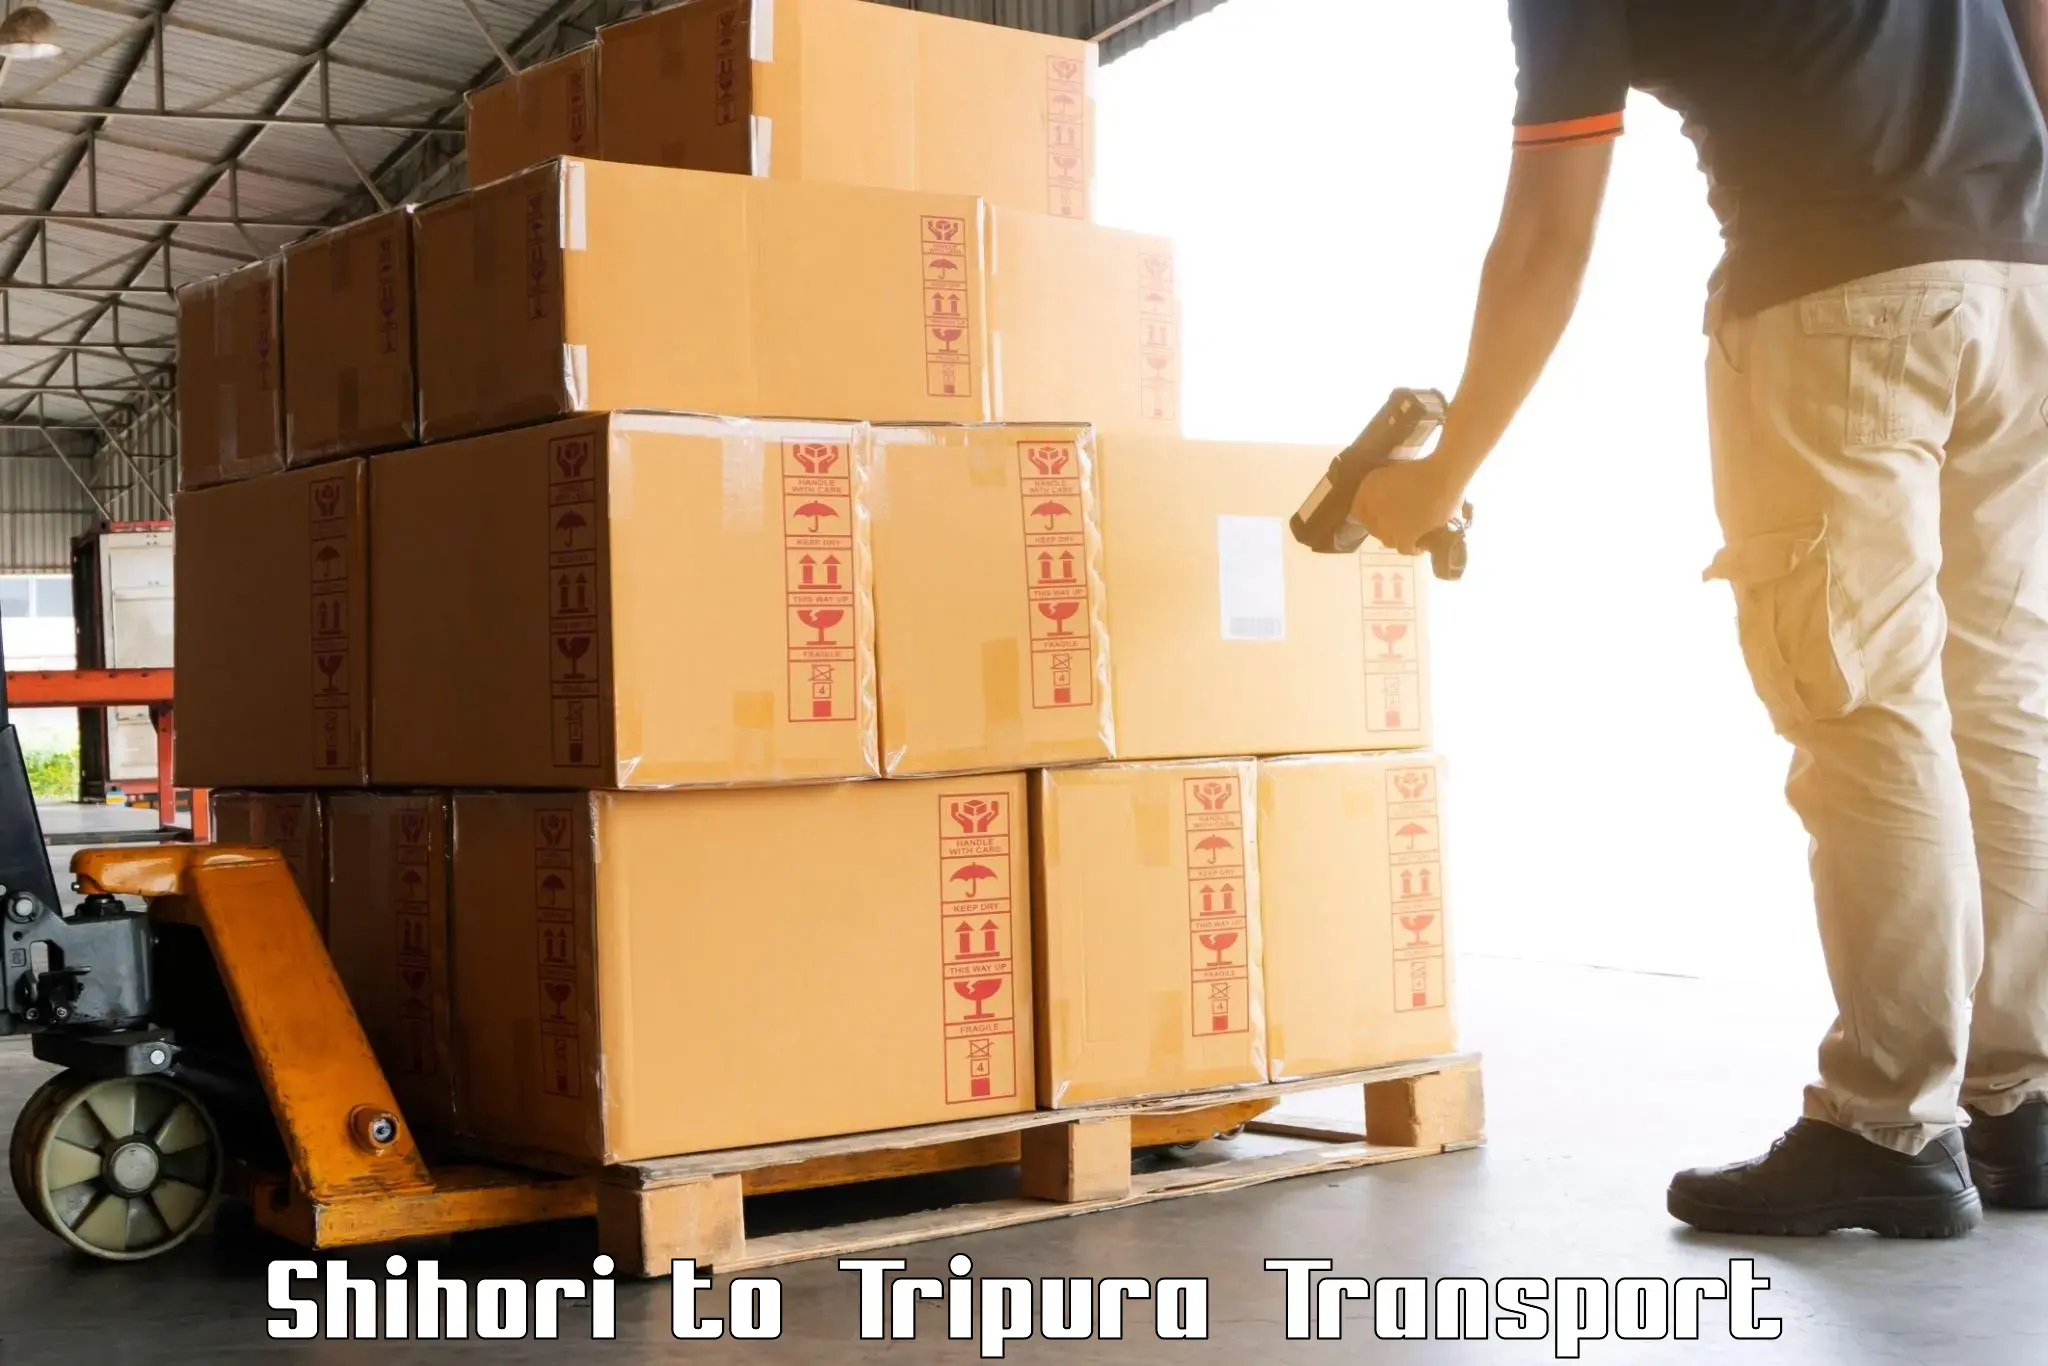 Transport in sharing Shihori to North Tripura